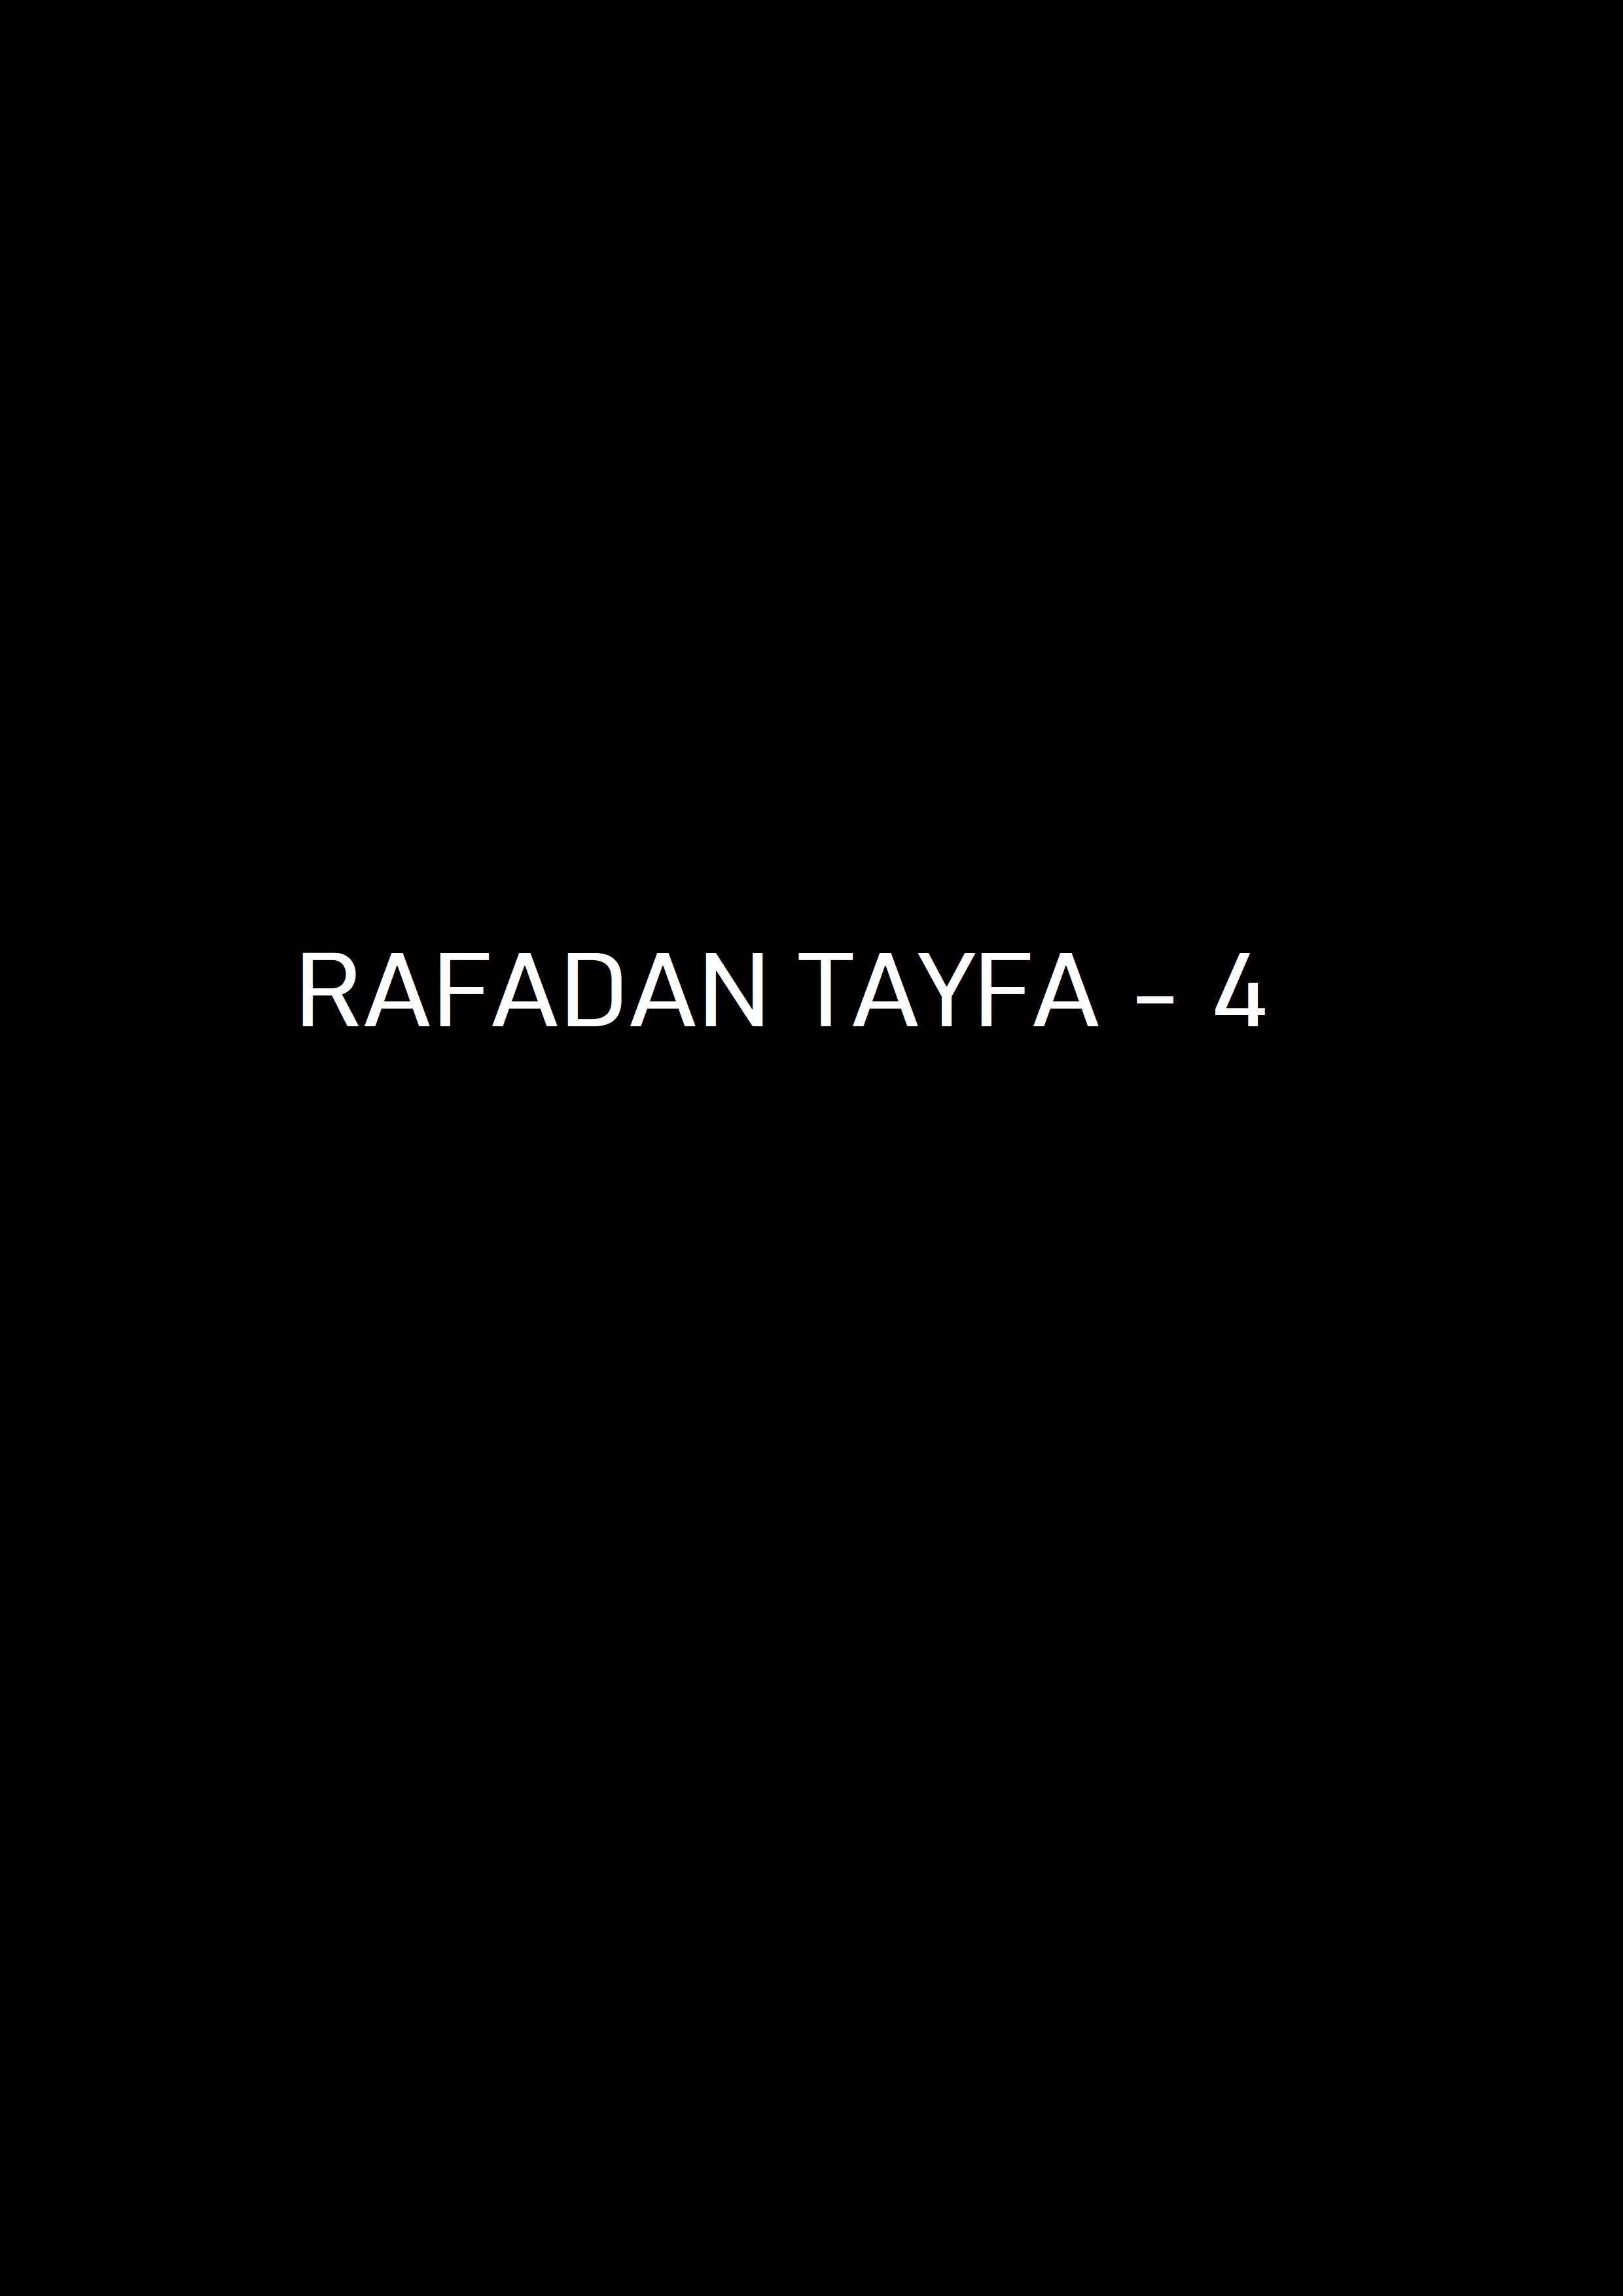 Rafadan Tayfa - 4